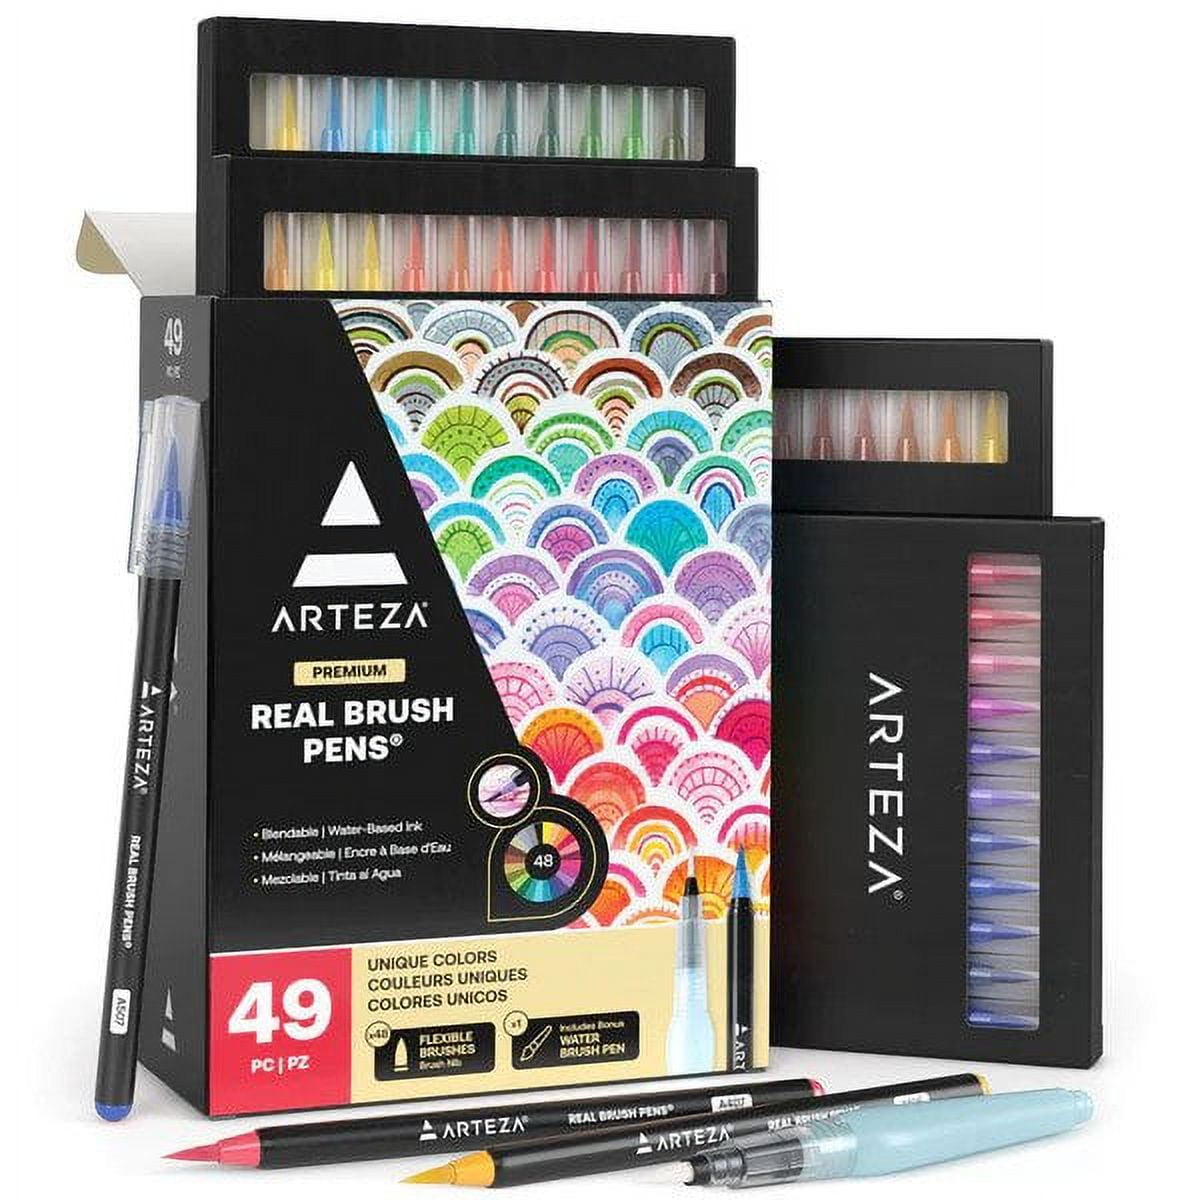 Arteza Real Brush Pens Demo & Review – MIXED UP CRAFT